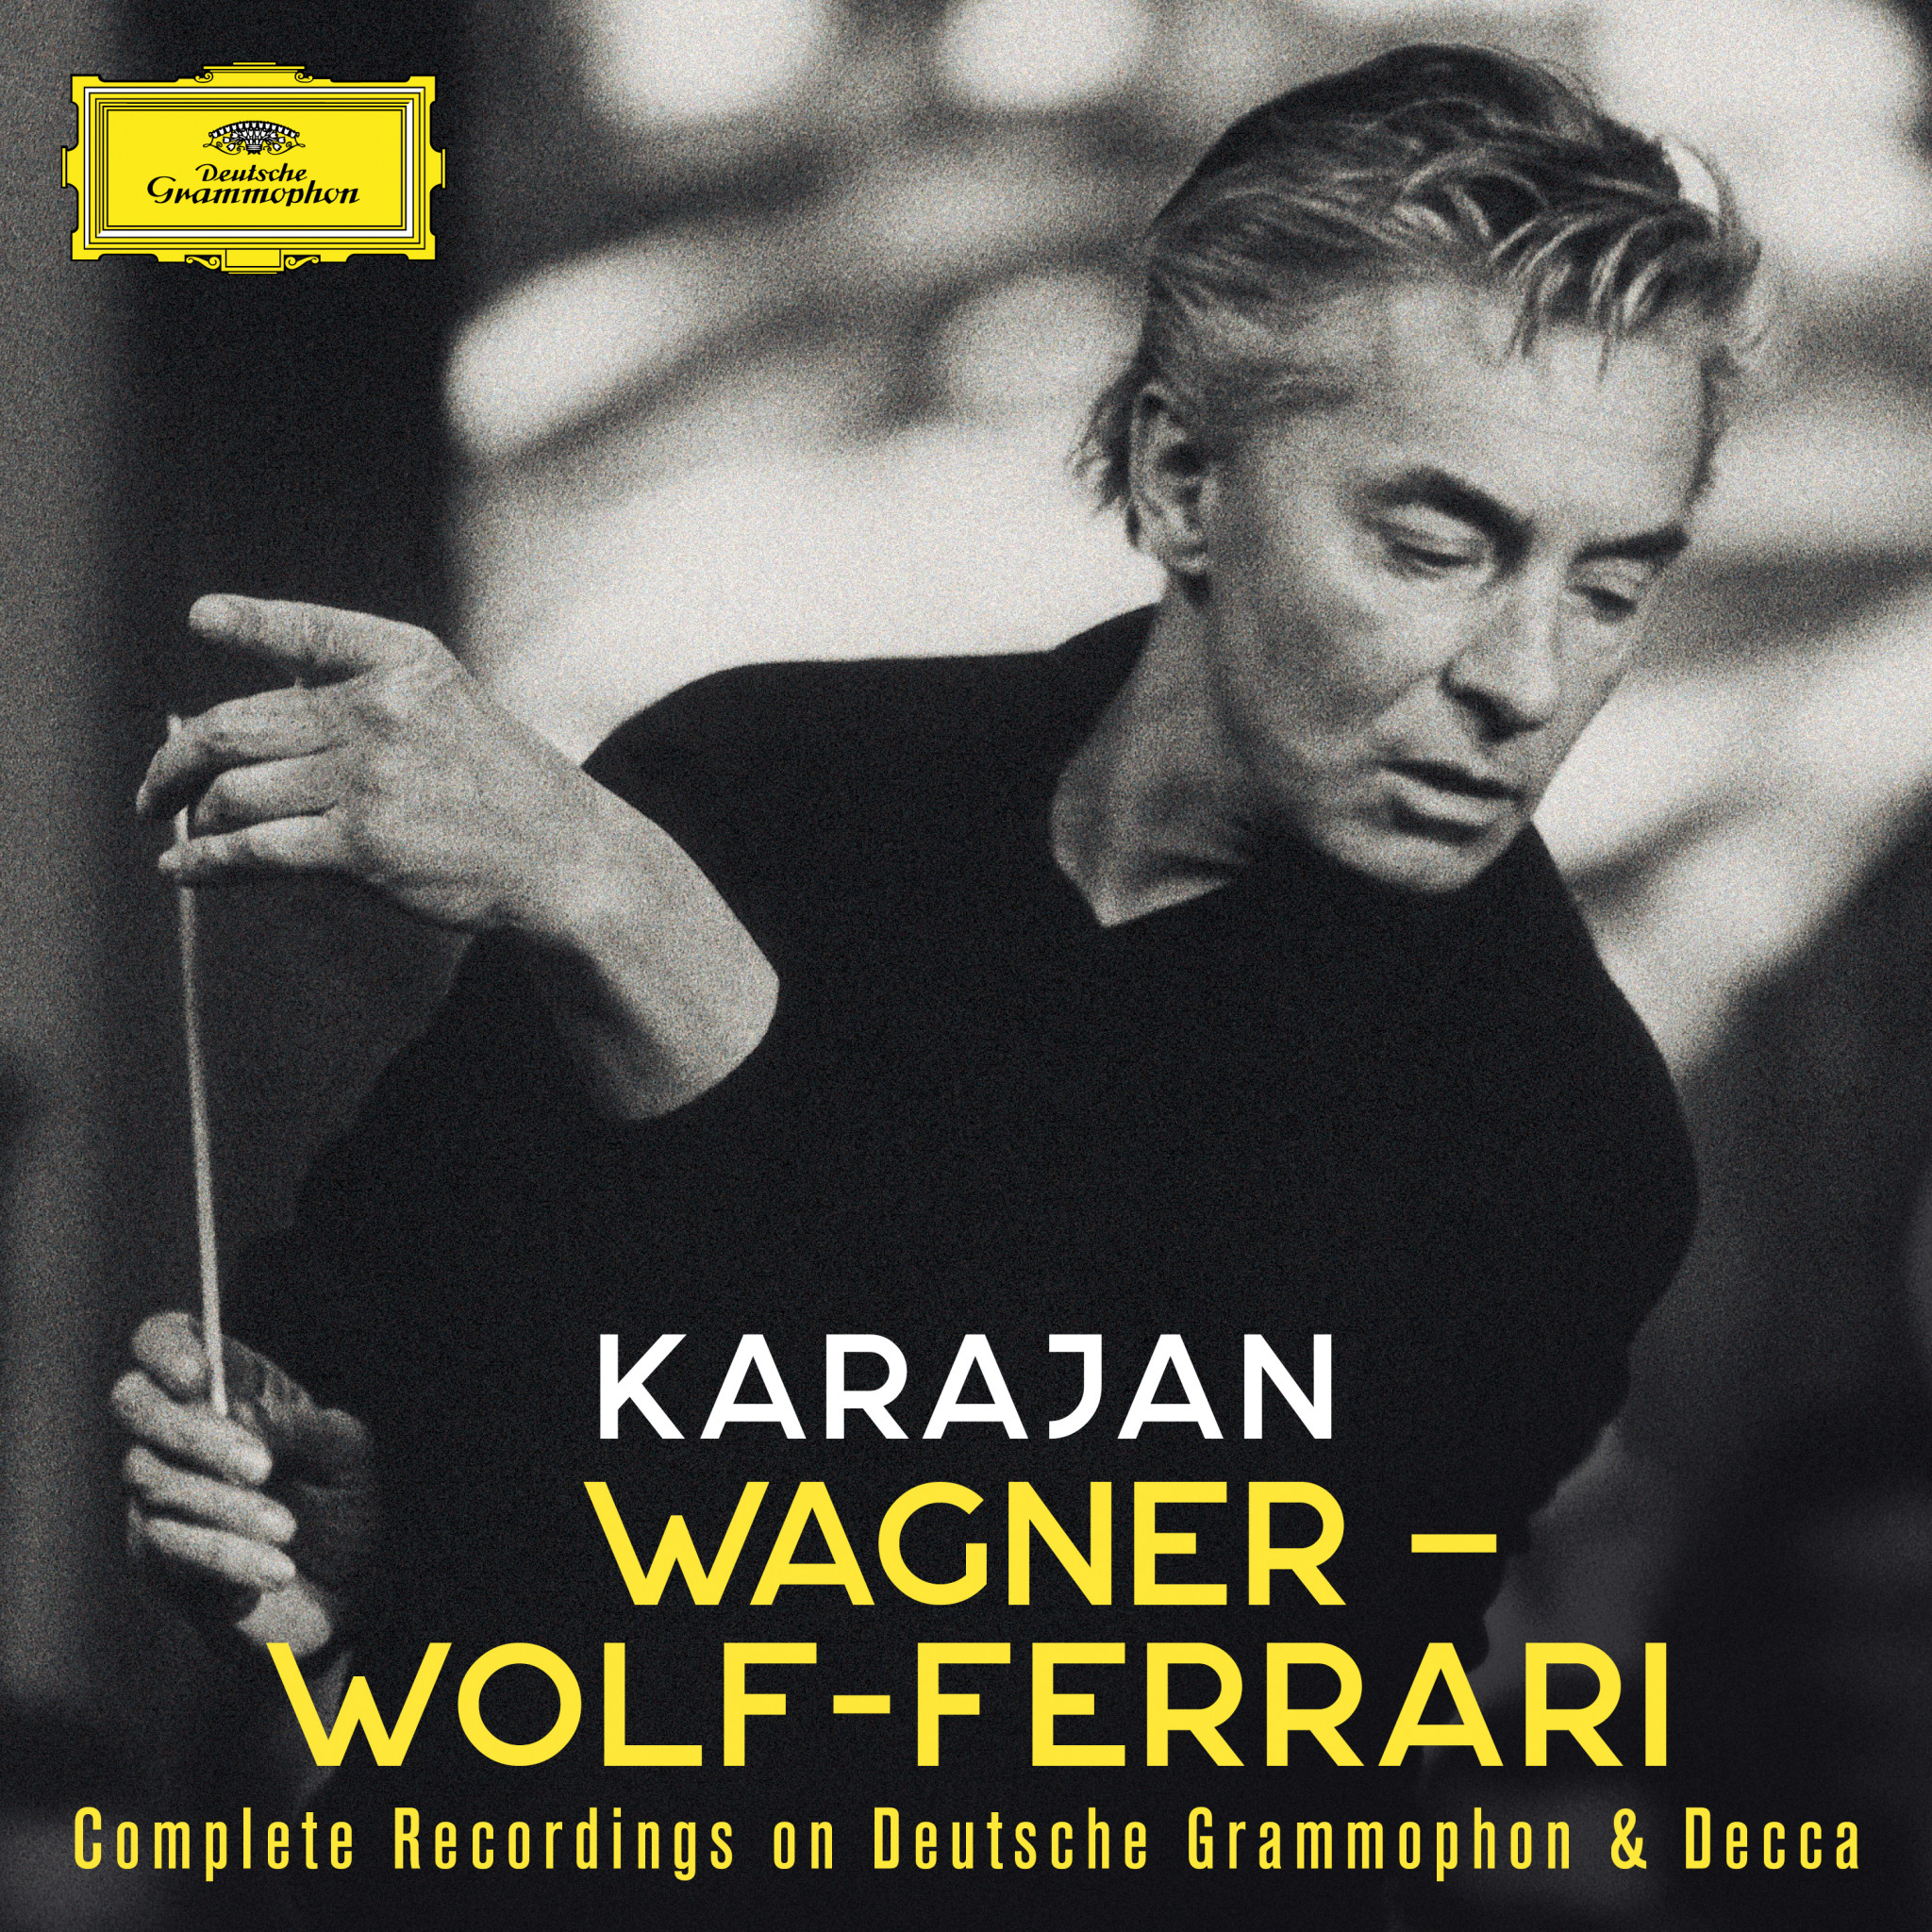 Karajan: Wagner - Wolf-Ferrari